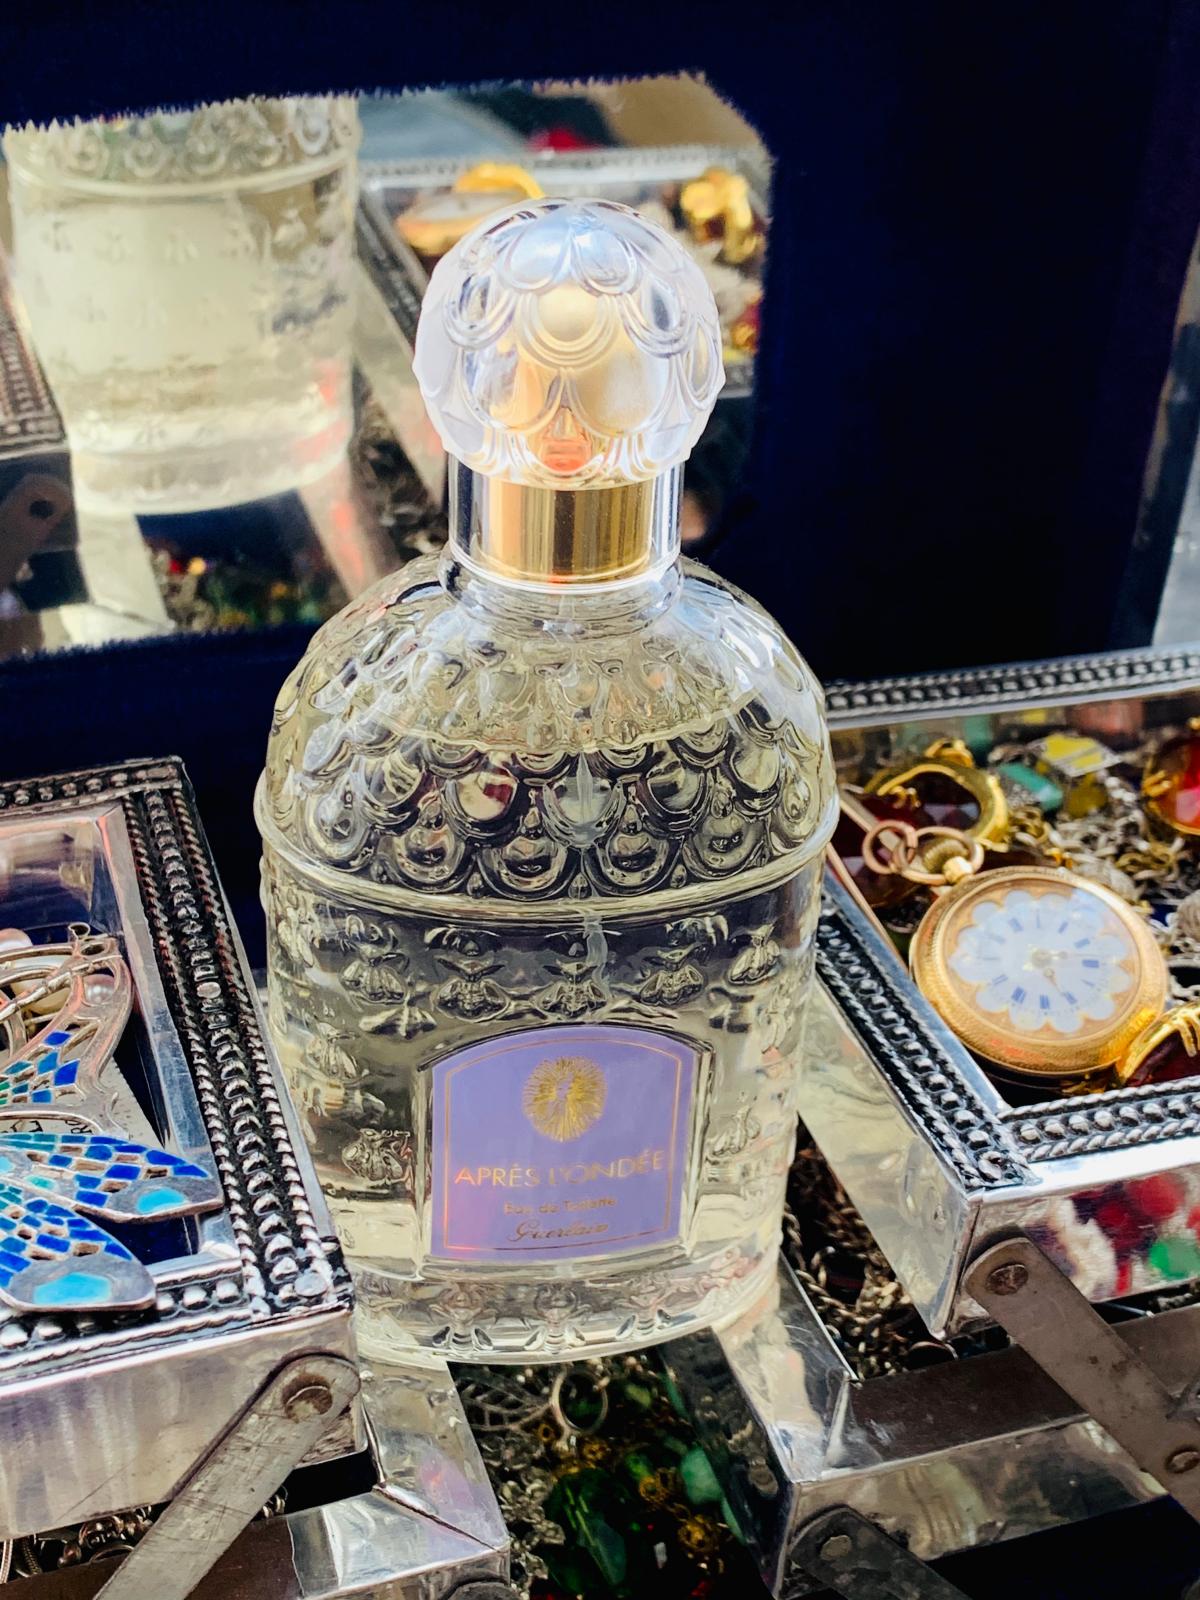 Apres l'Ondee Guerlain perfume - a fragrance for women 1906